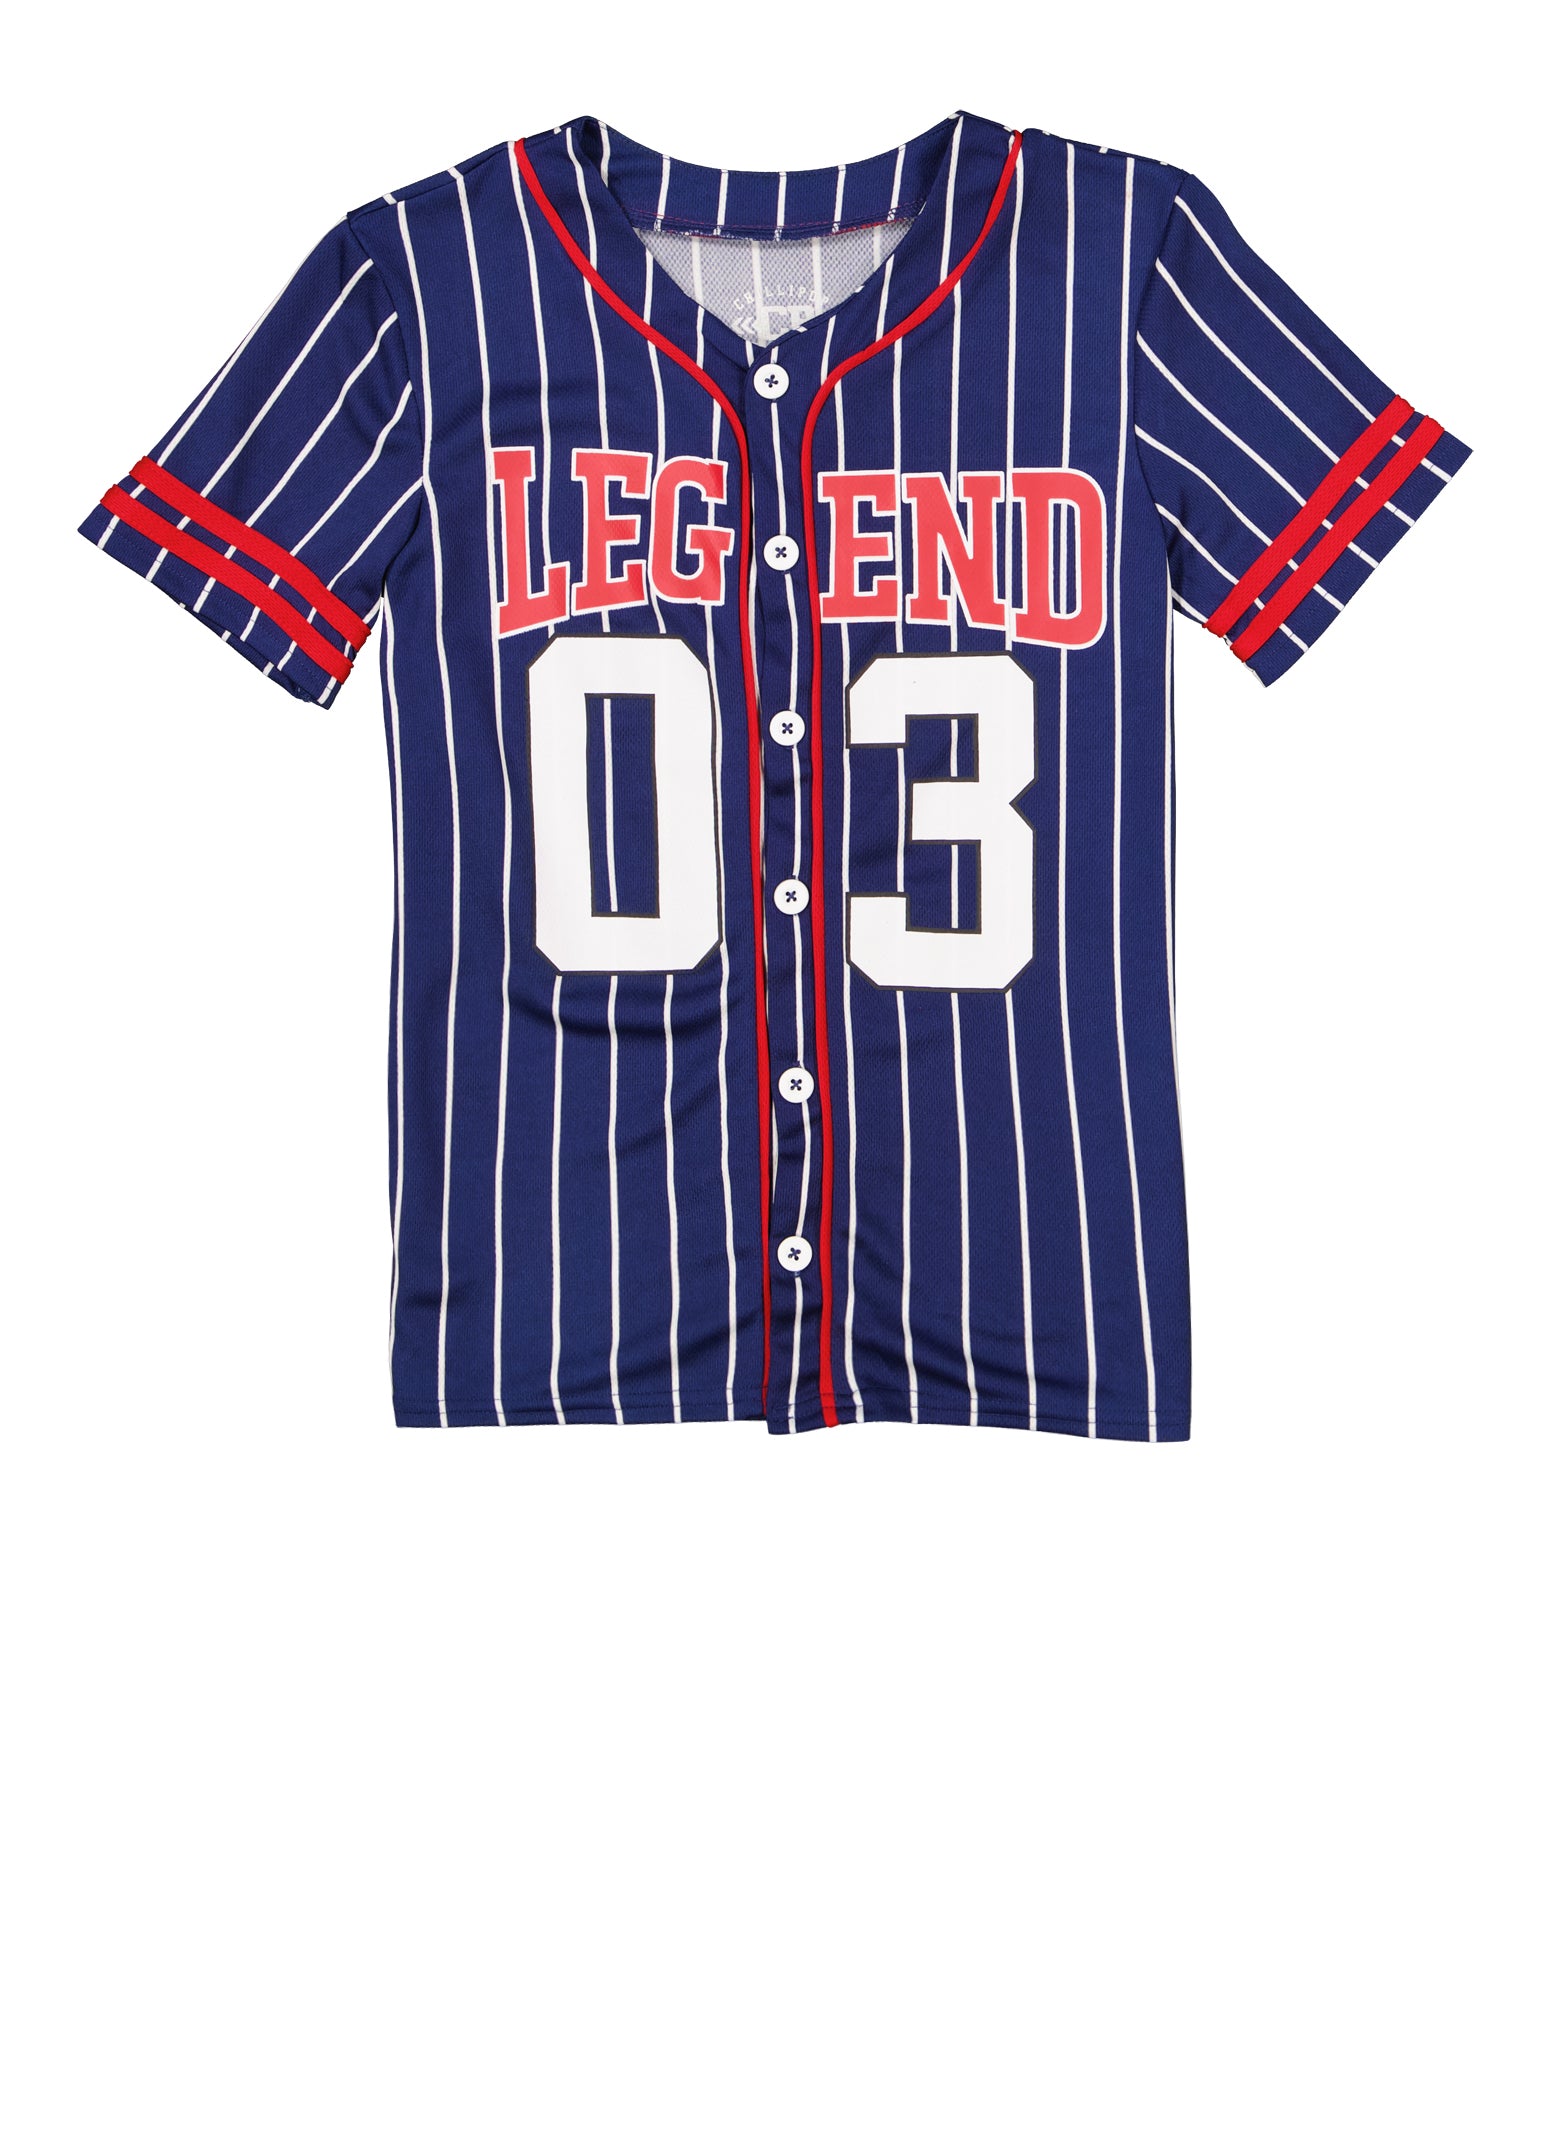 Little Boys Striped Legend 03 Graphic Baseball Jersey, Blue, Size 5-6